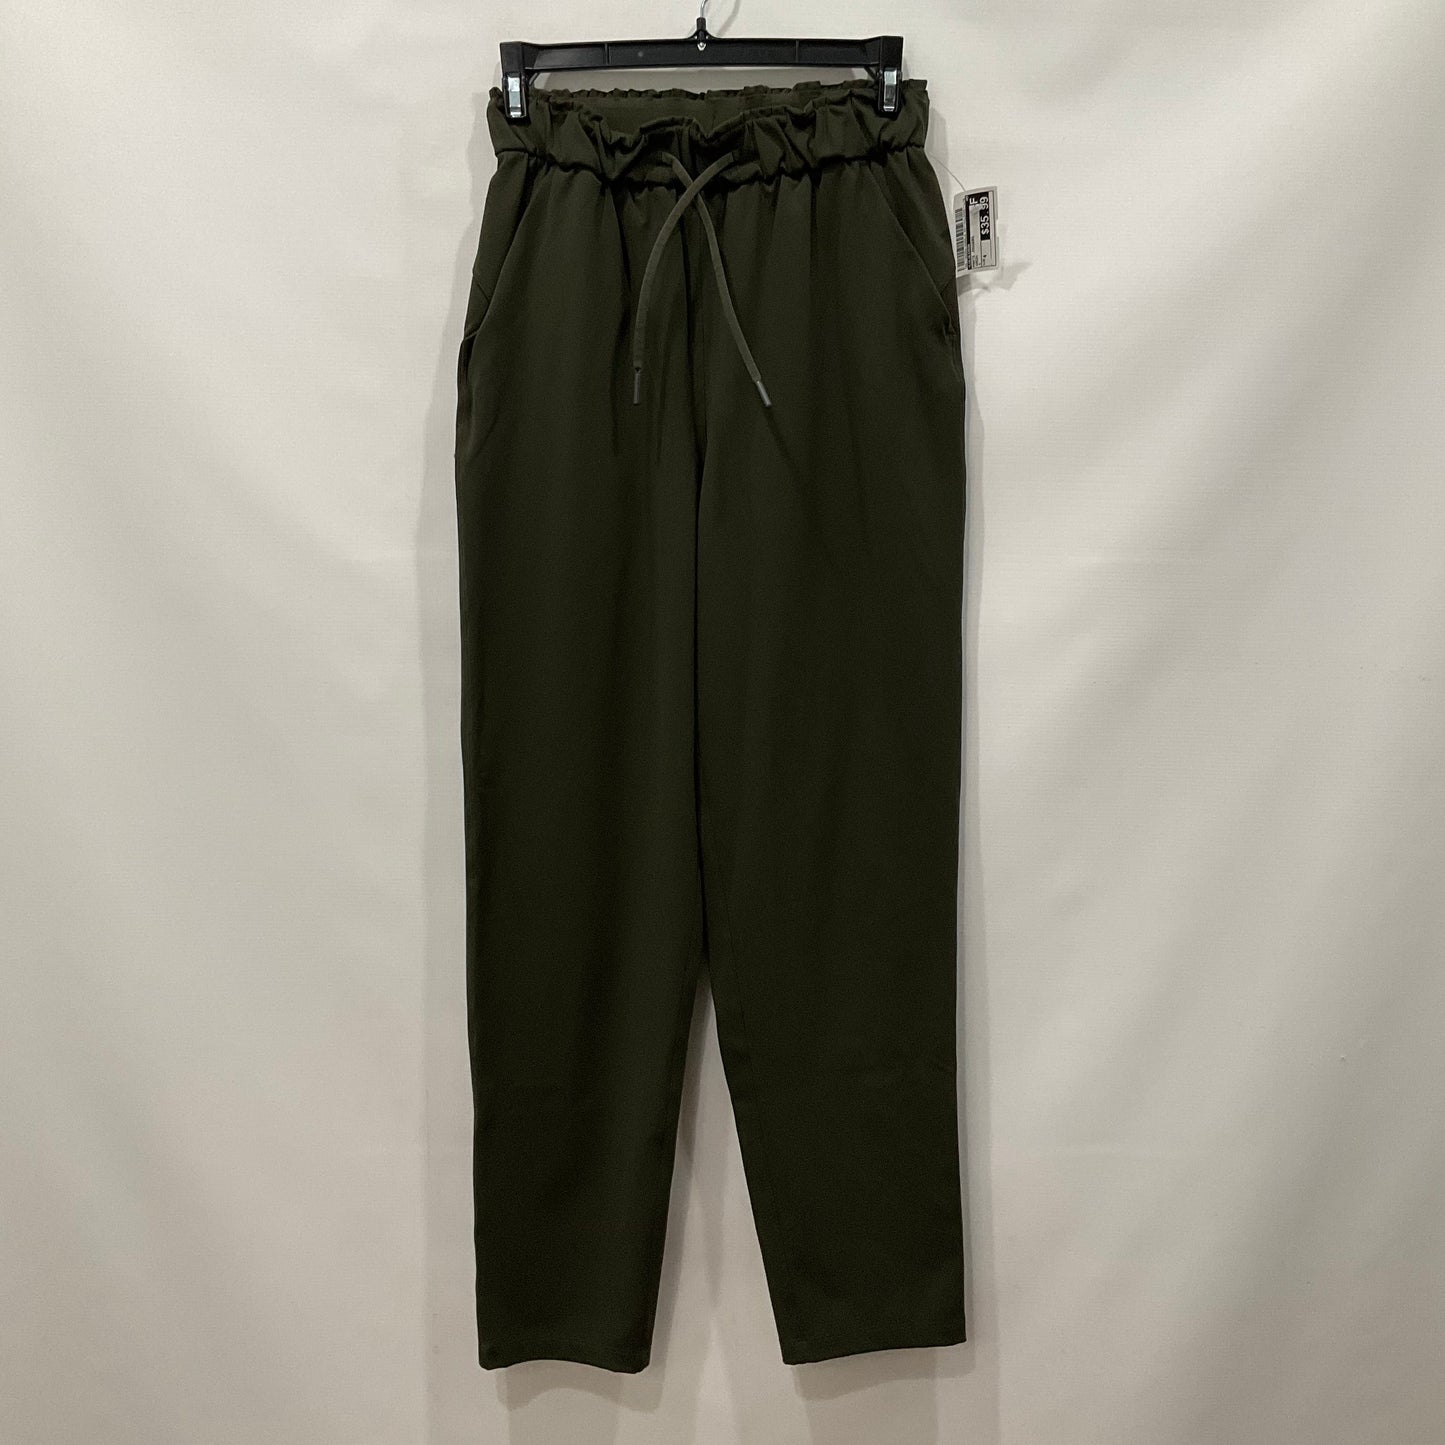 Green Pants Joggers Lululemon, Size 4